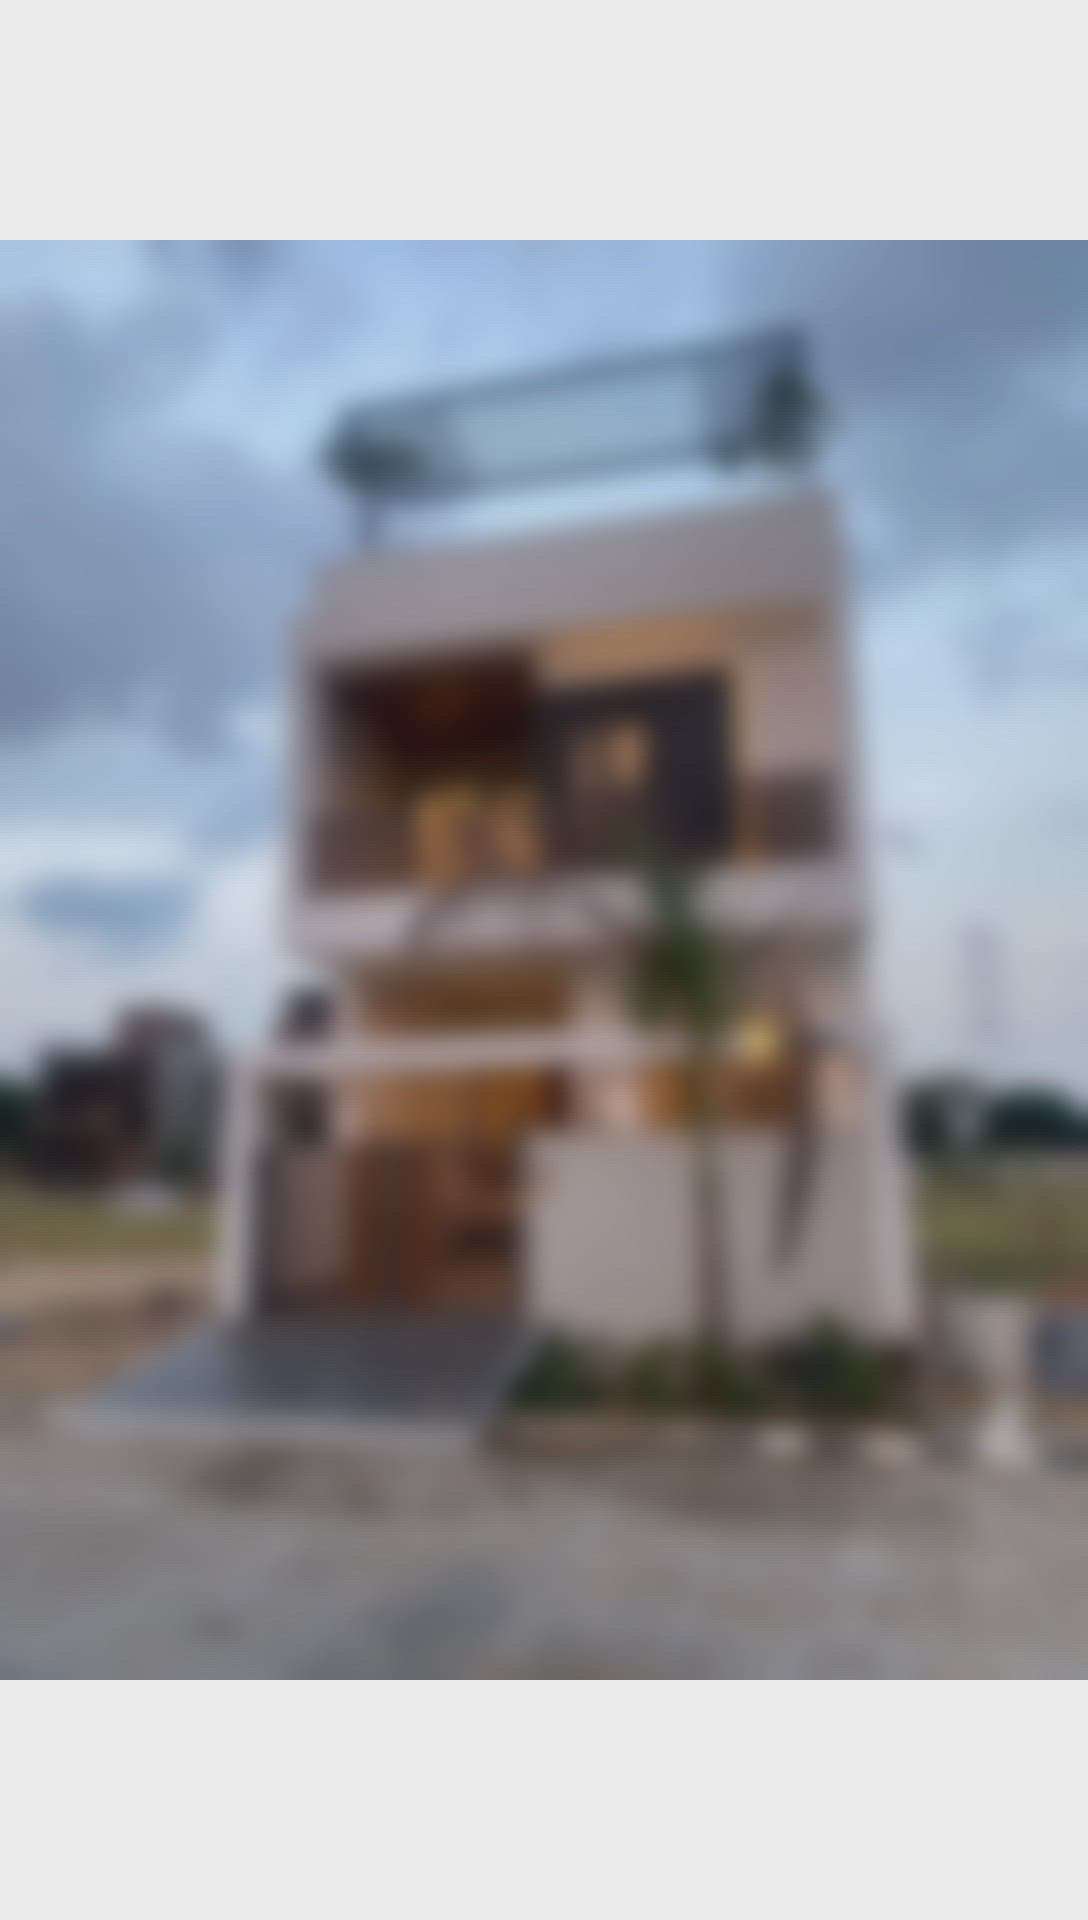 sale Sale Sale 🎉

Book Now 👇
+91-7791048109

.
.
.
 #villasale #villa_design 
#DuplexHouse #LUXURY_INTERIOR #3d_villa_design #villaconstruction #jaipur #jaipurcity #villainterior